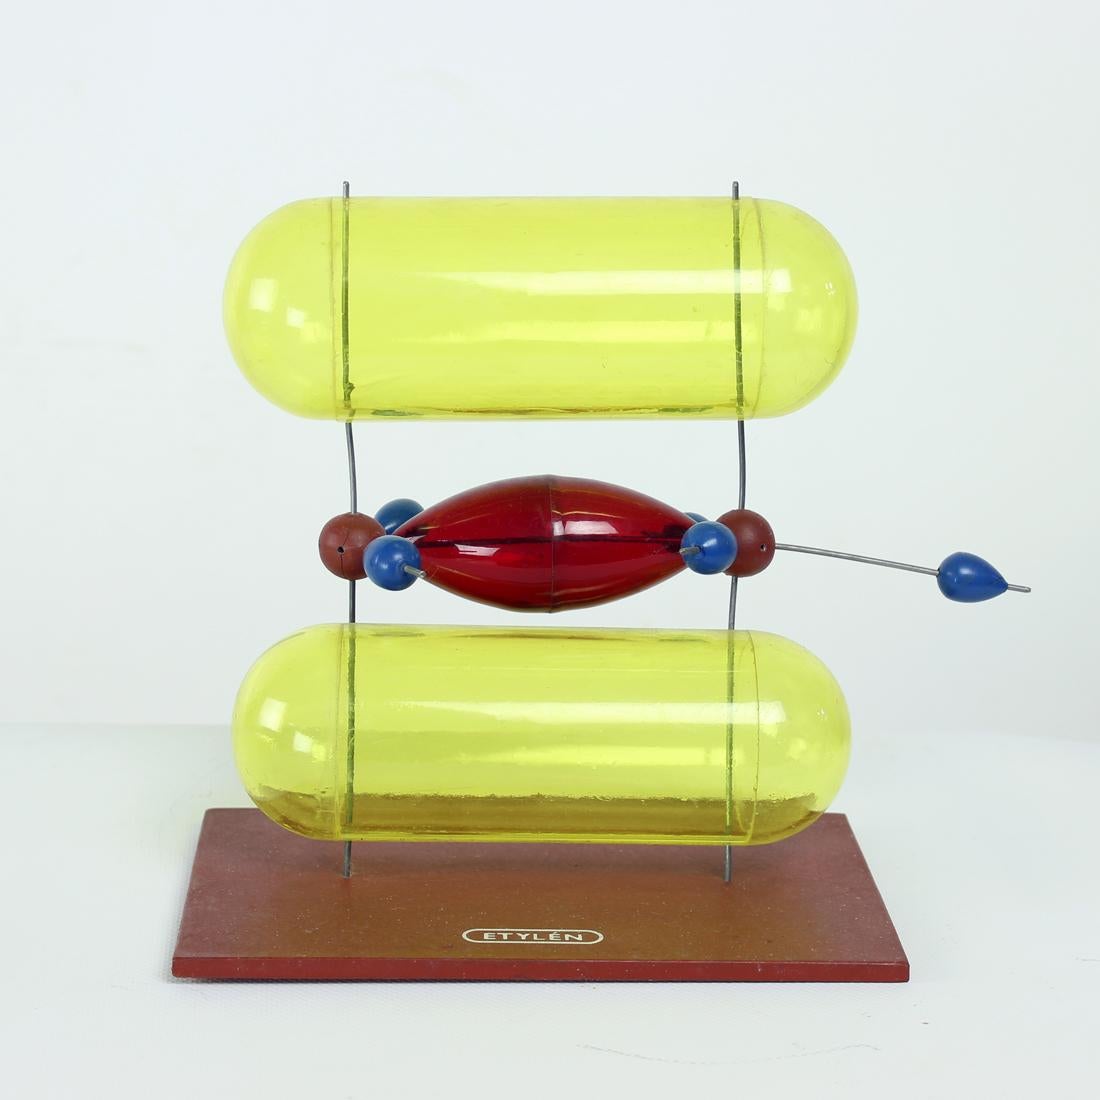 Mid-20th Century Plastic School Model Of Ethylen, Czechoslovakia 1960s For Sale